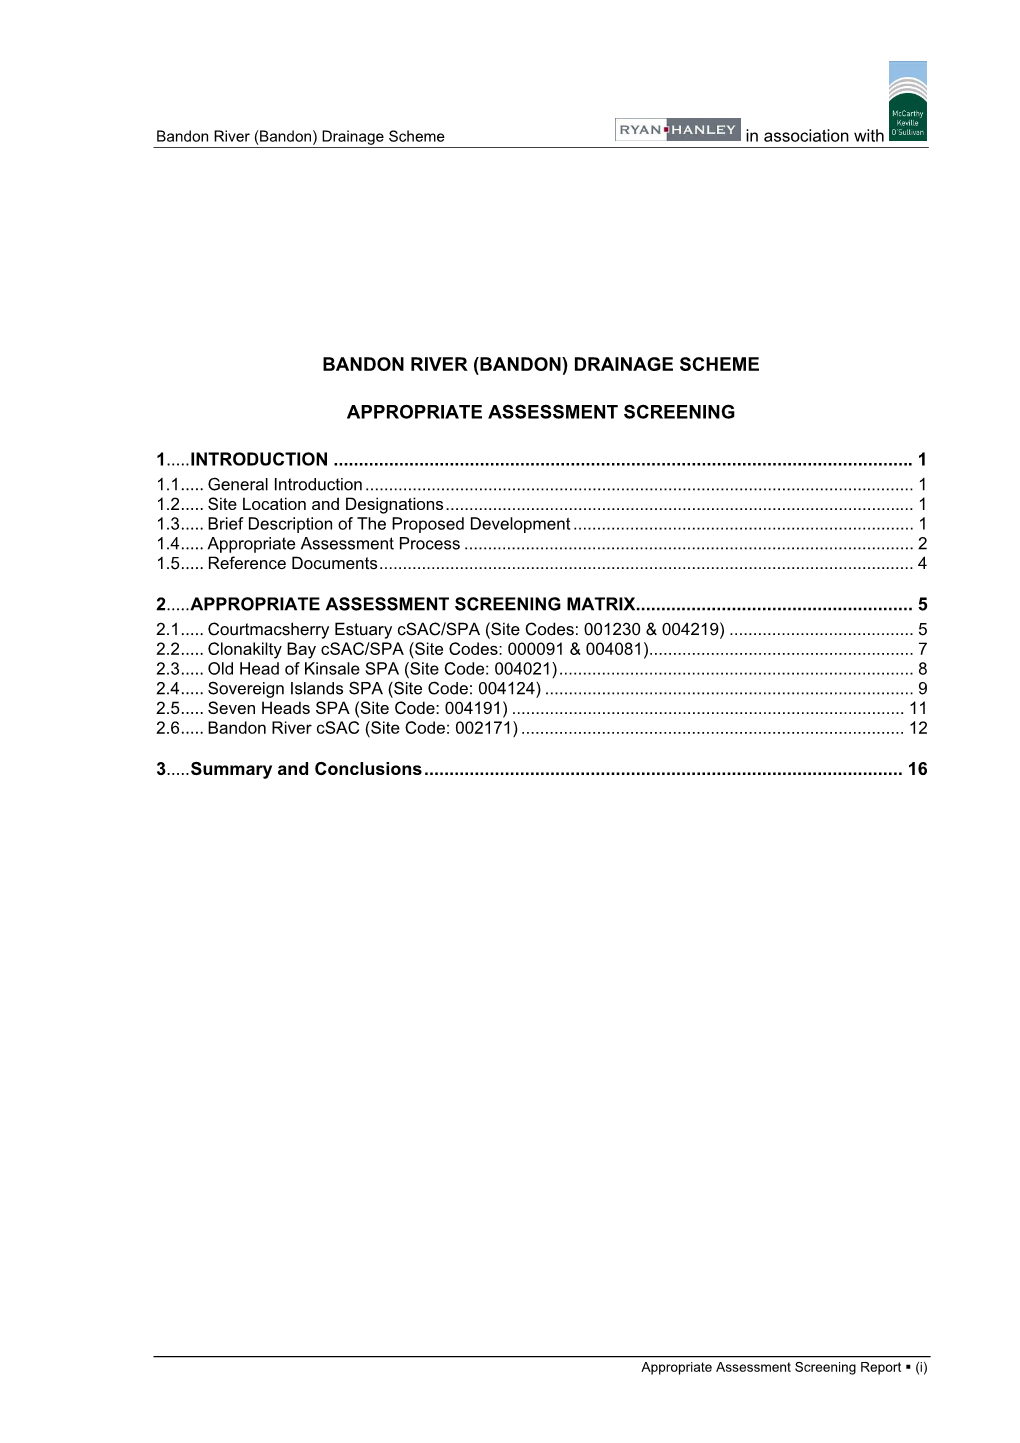 (Bandon) Drainage Scheme Appropriate Assessment Screening